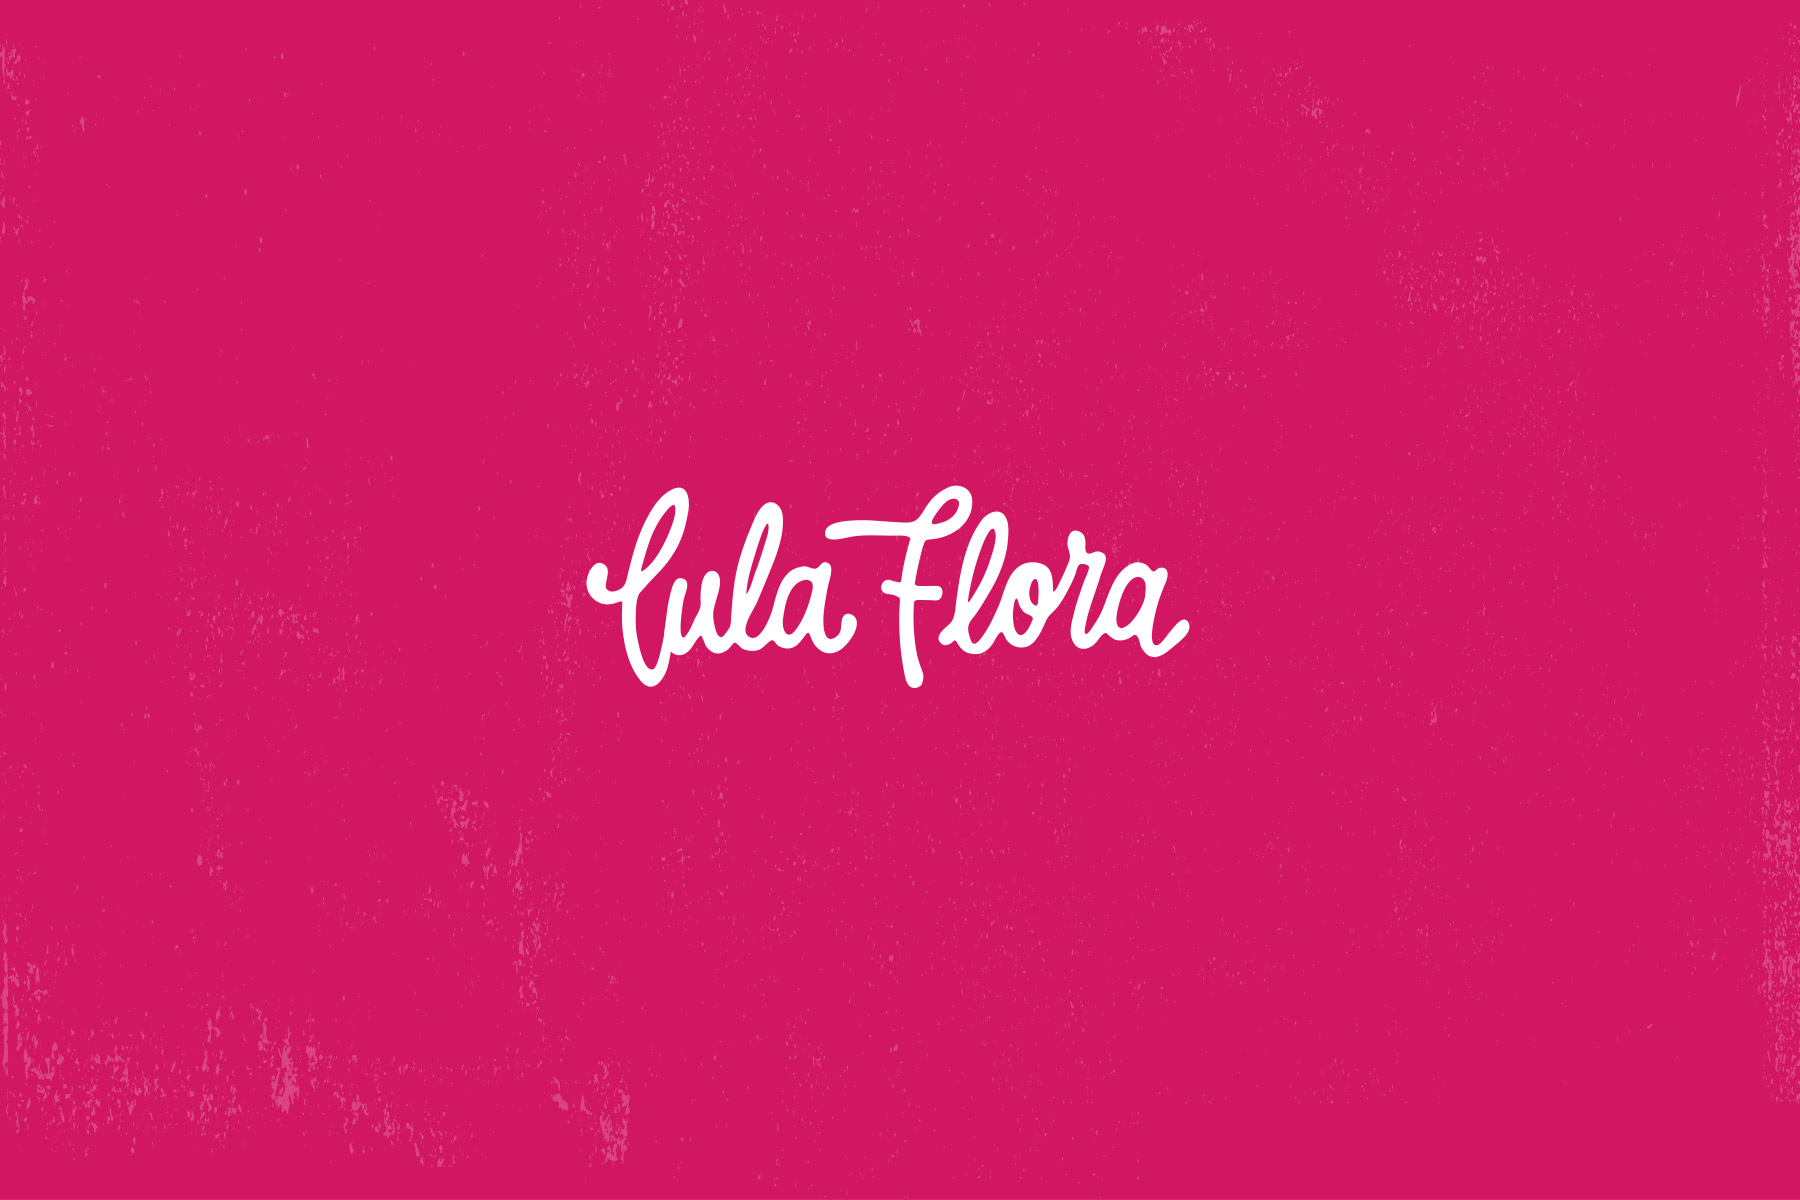 Lula Flora script logo in white